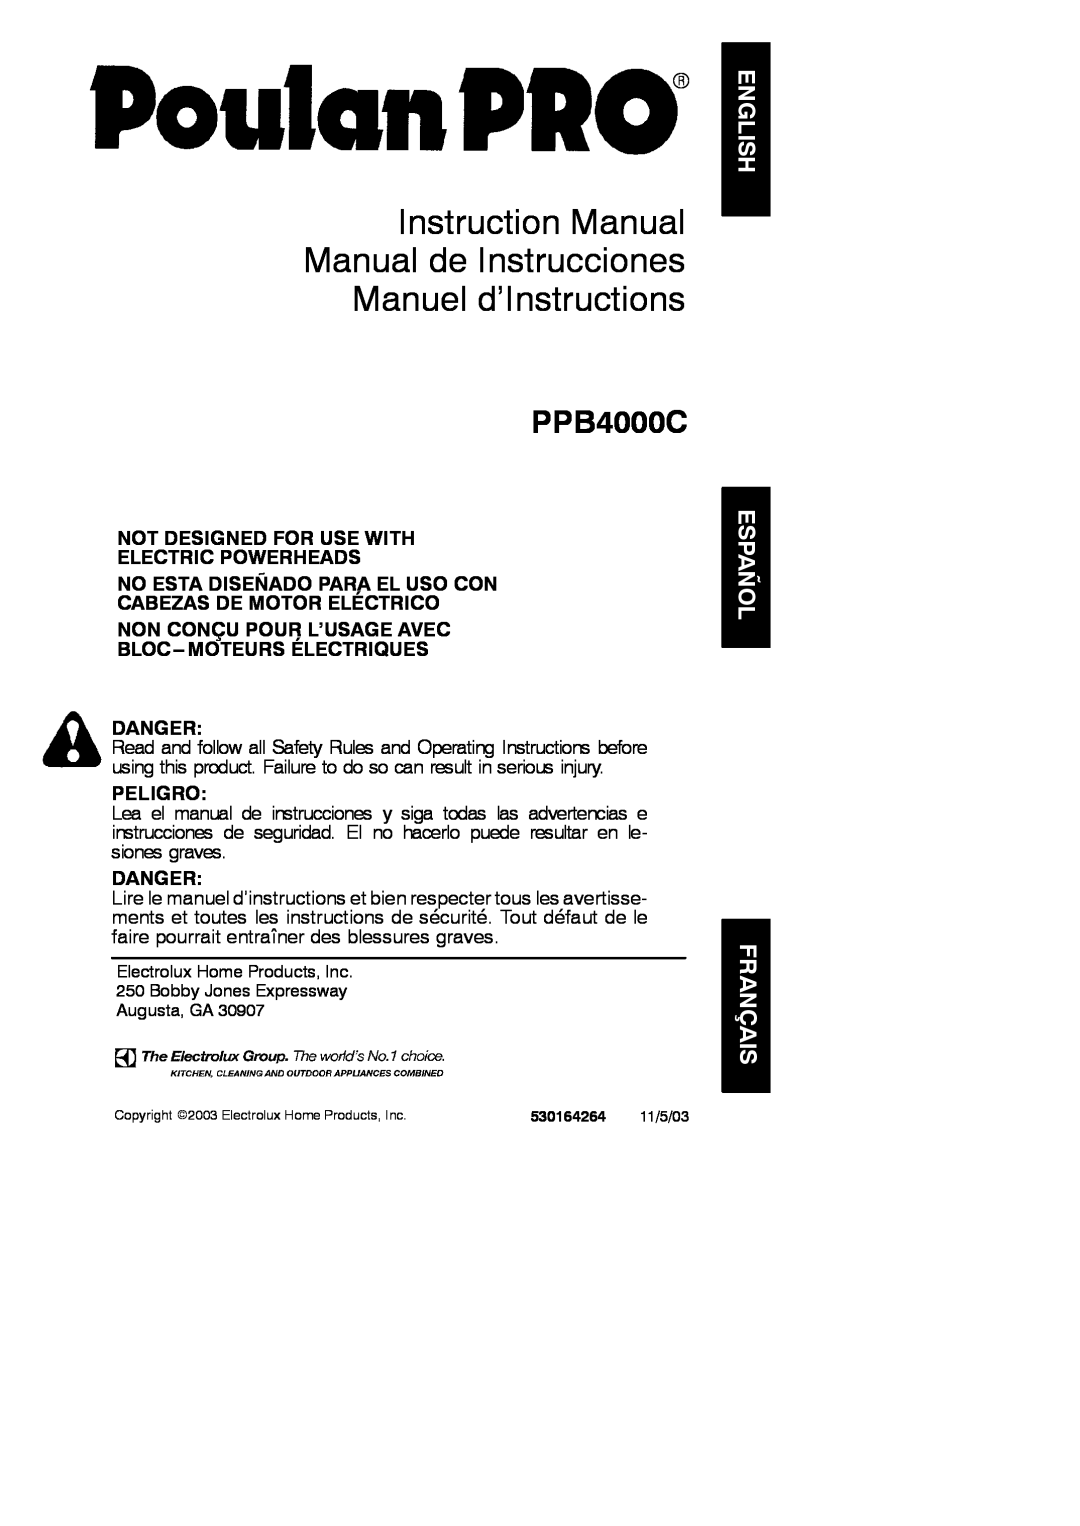 Poulan 530164264 instruction manual PPB4000C, English, Español Français, Not Designed For Use With Electric Powerheads 